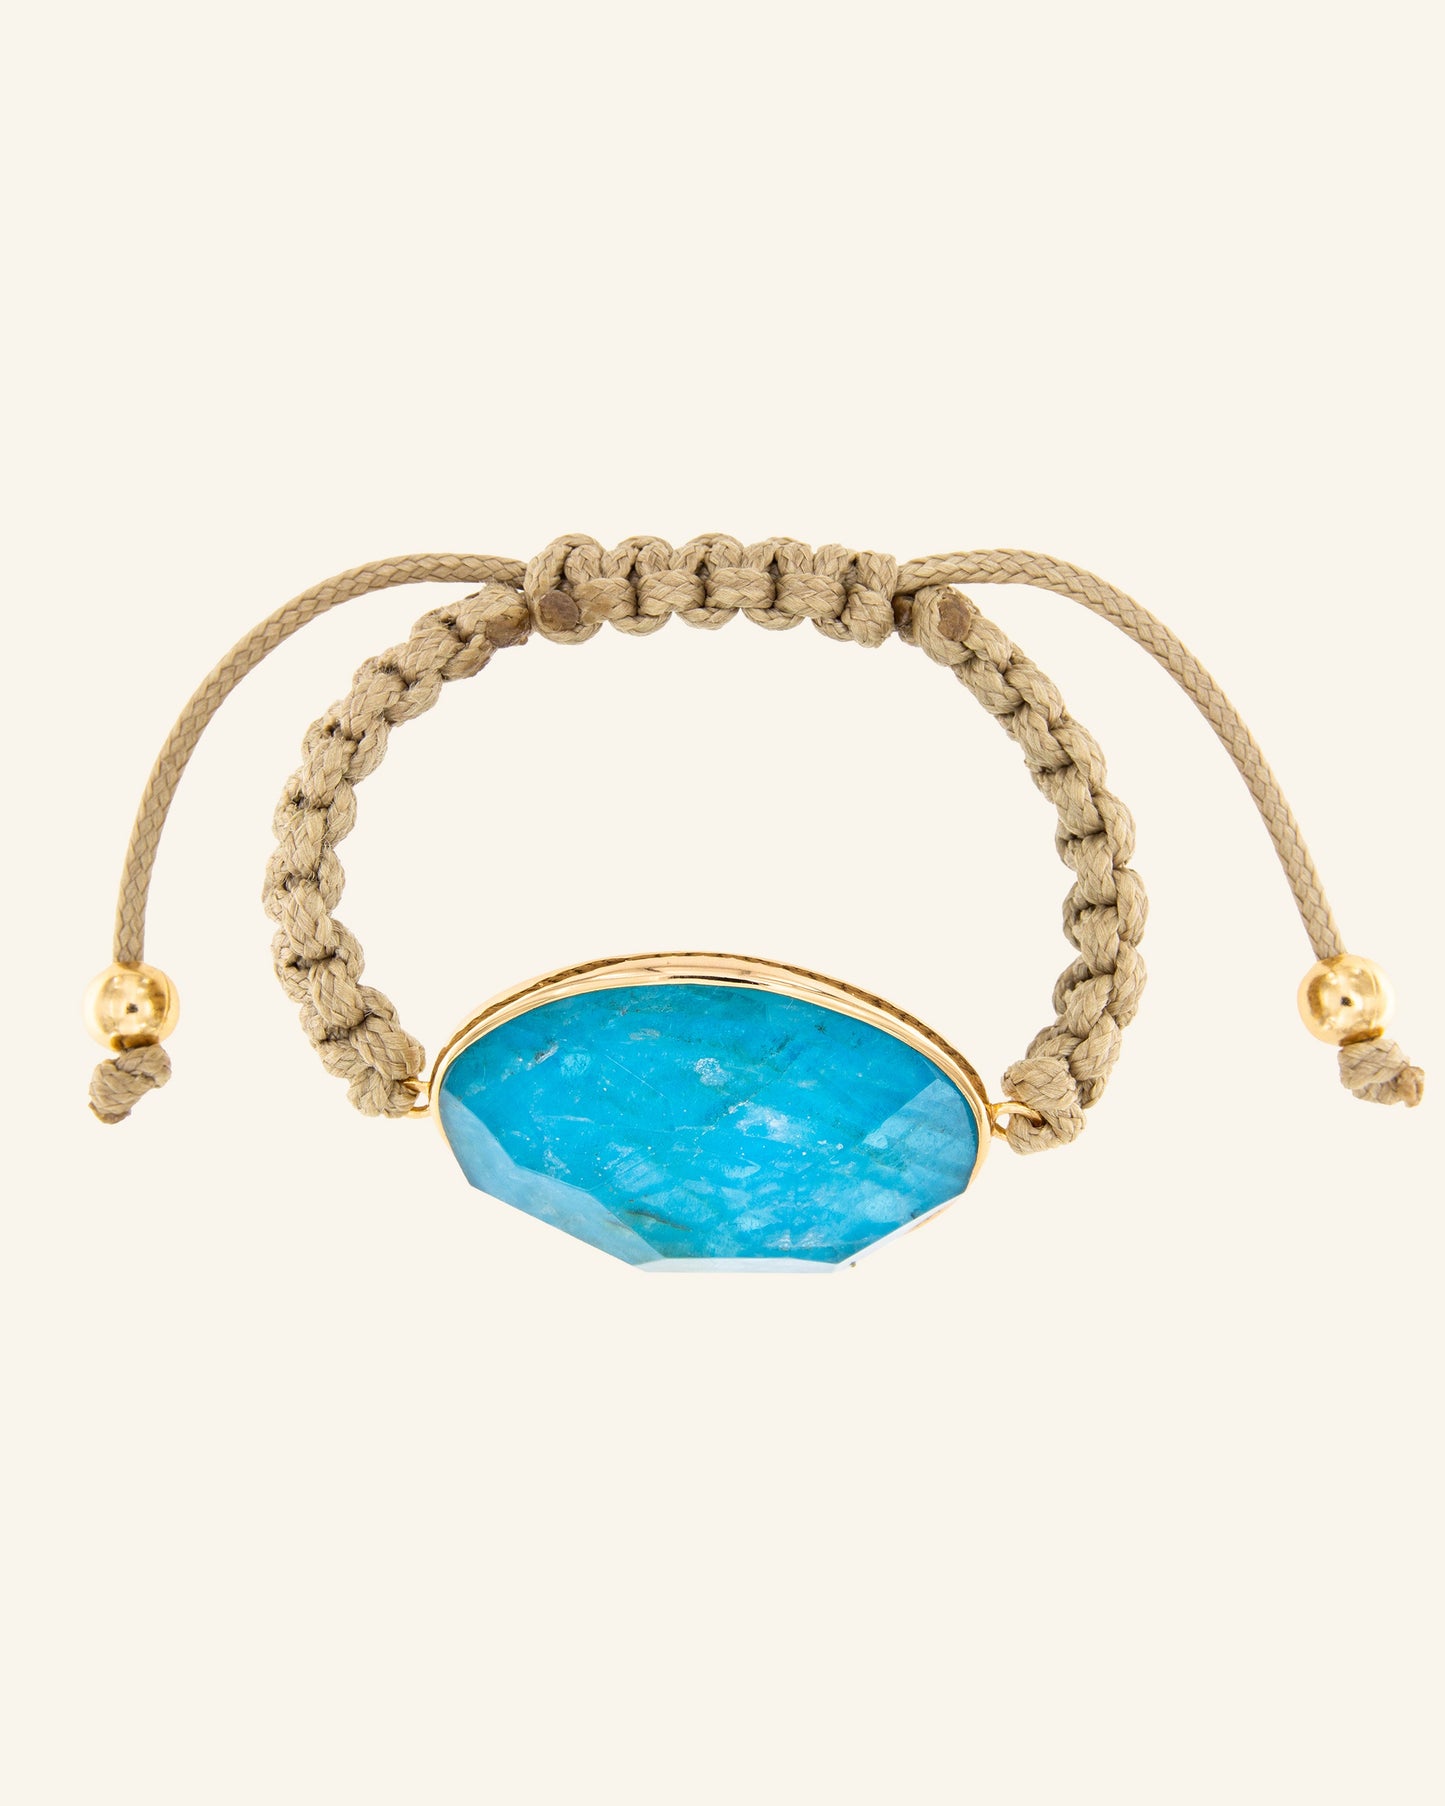 Chance bracelet with blue apatite